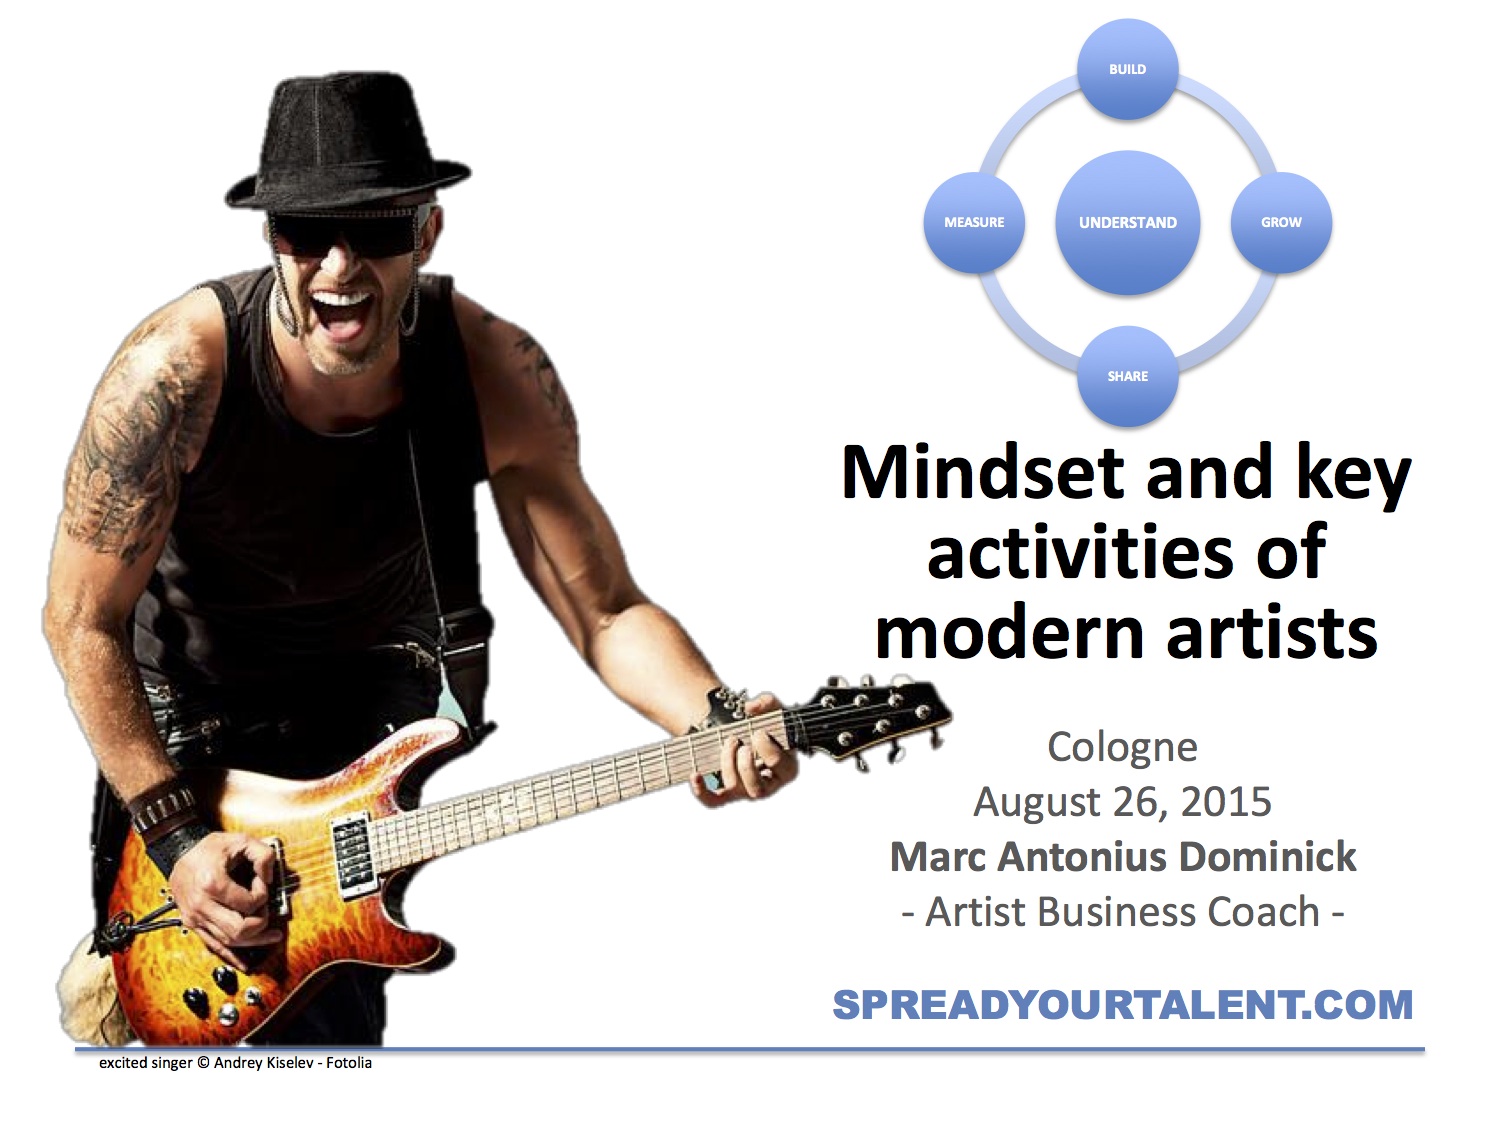 Mindset and Key Activities of Modern Artists - SPREADYOURTALENT.COM